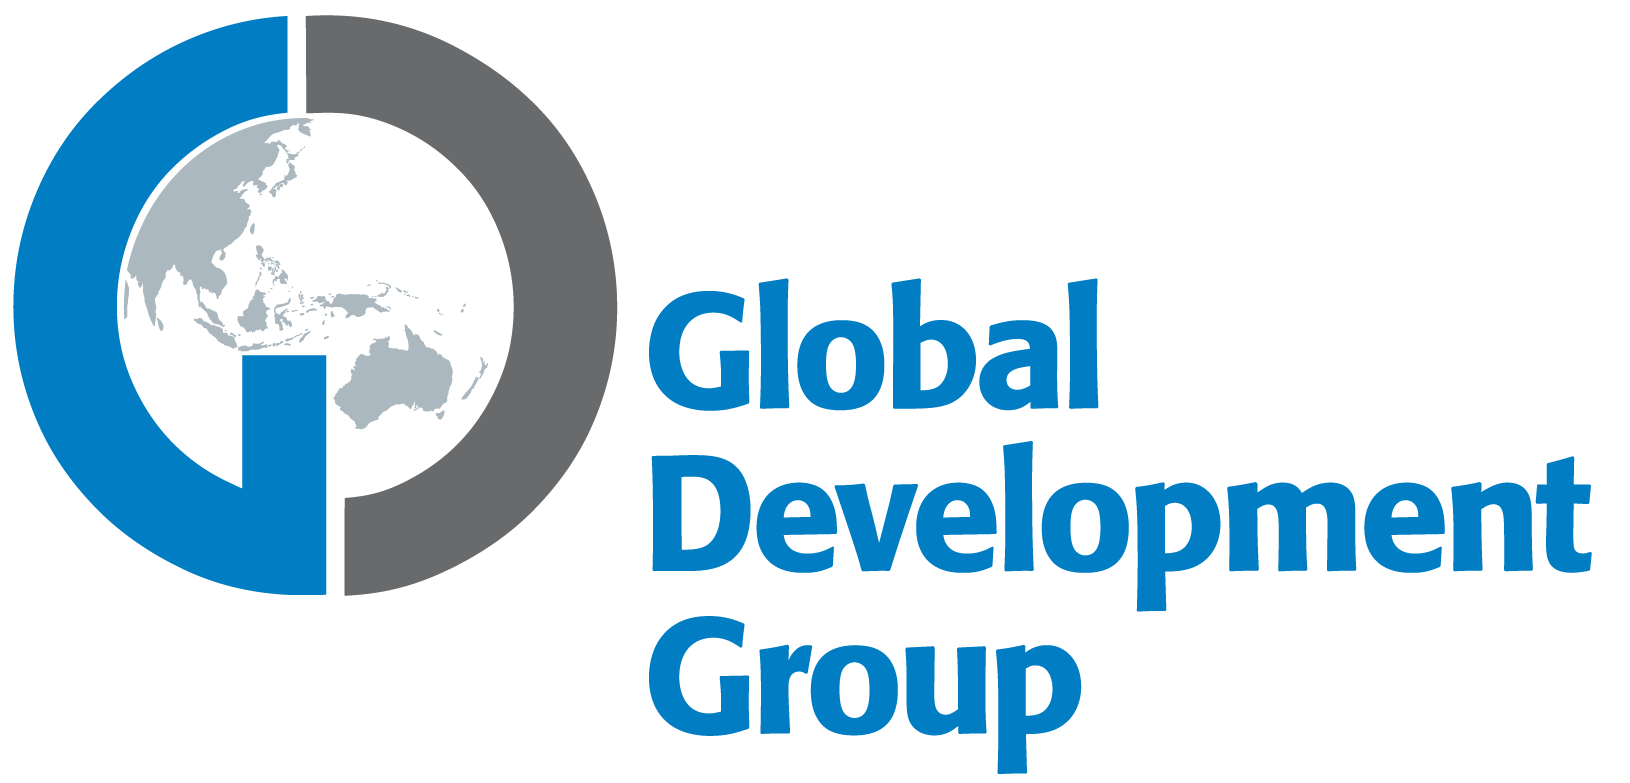 Global Development Group logo